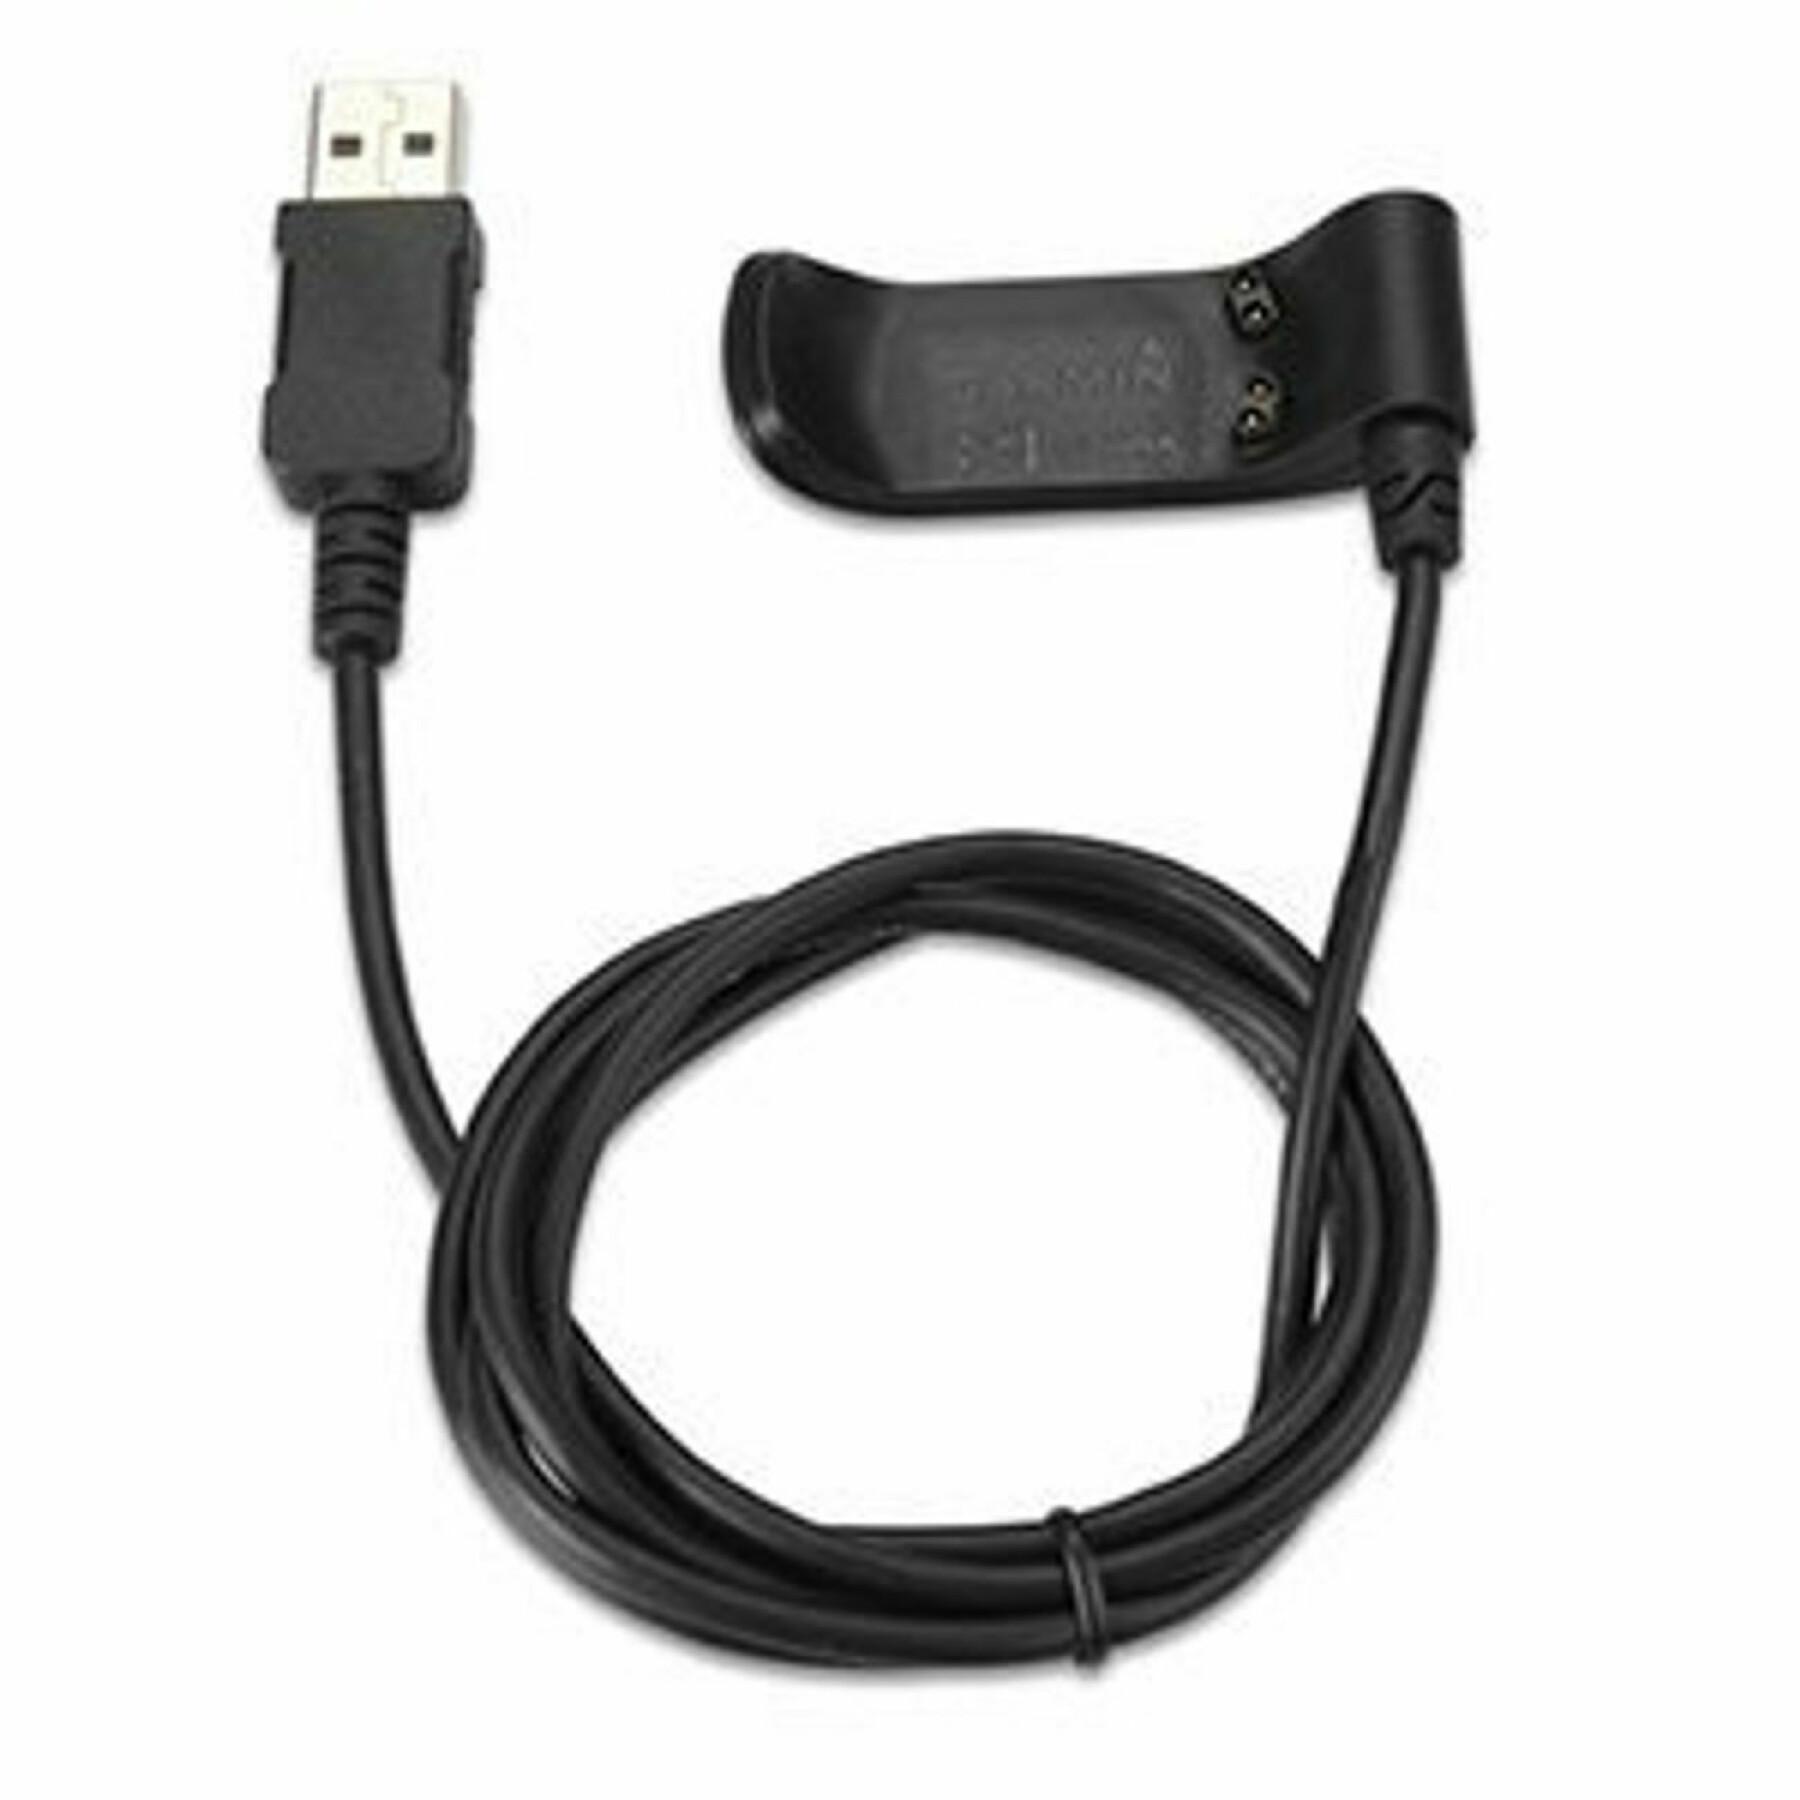 Cable USB Garmin chargement